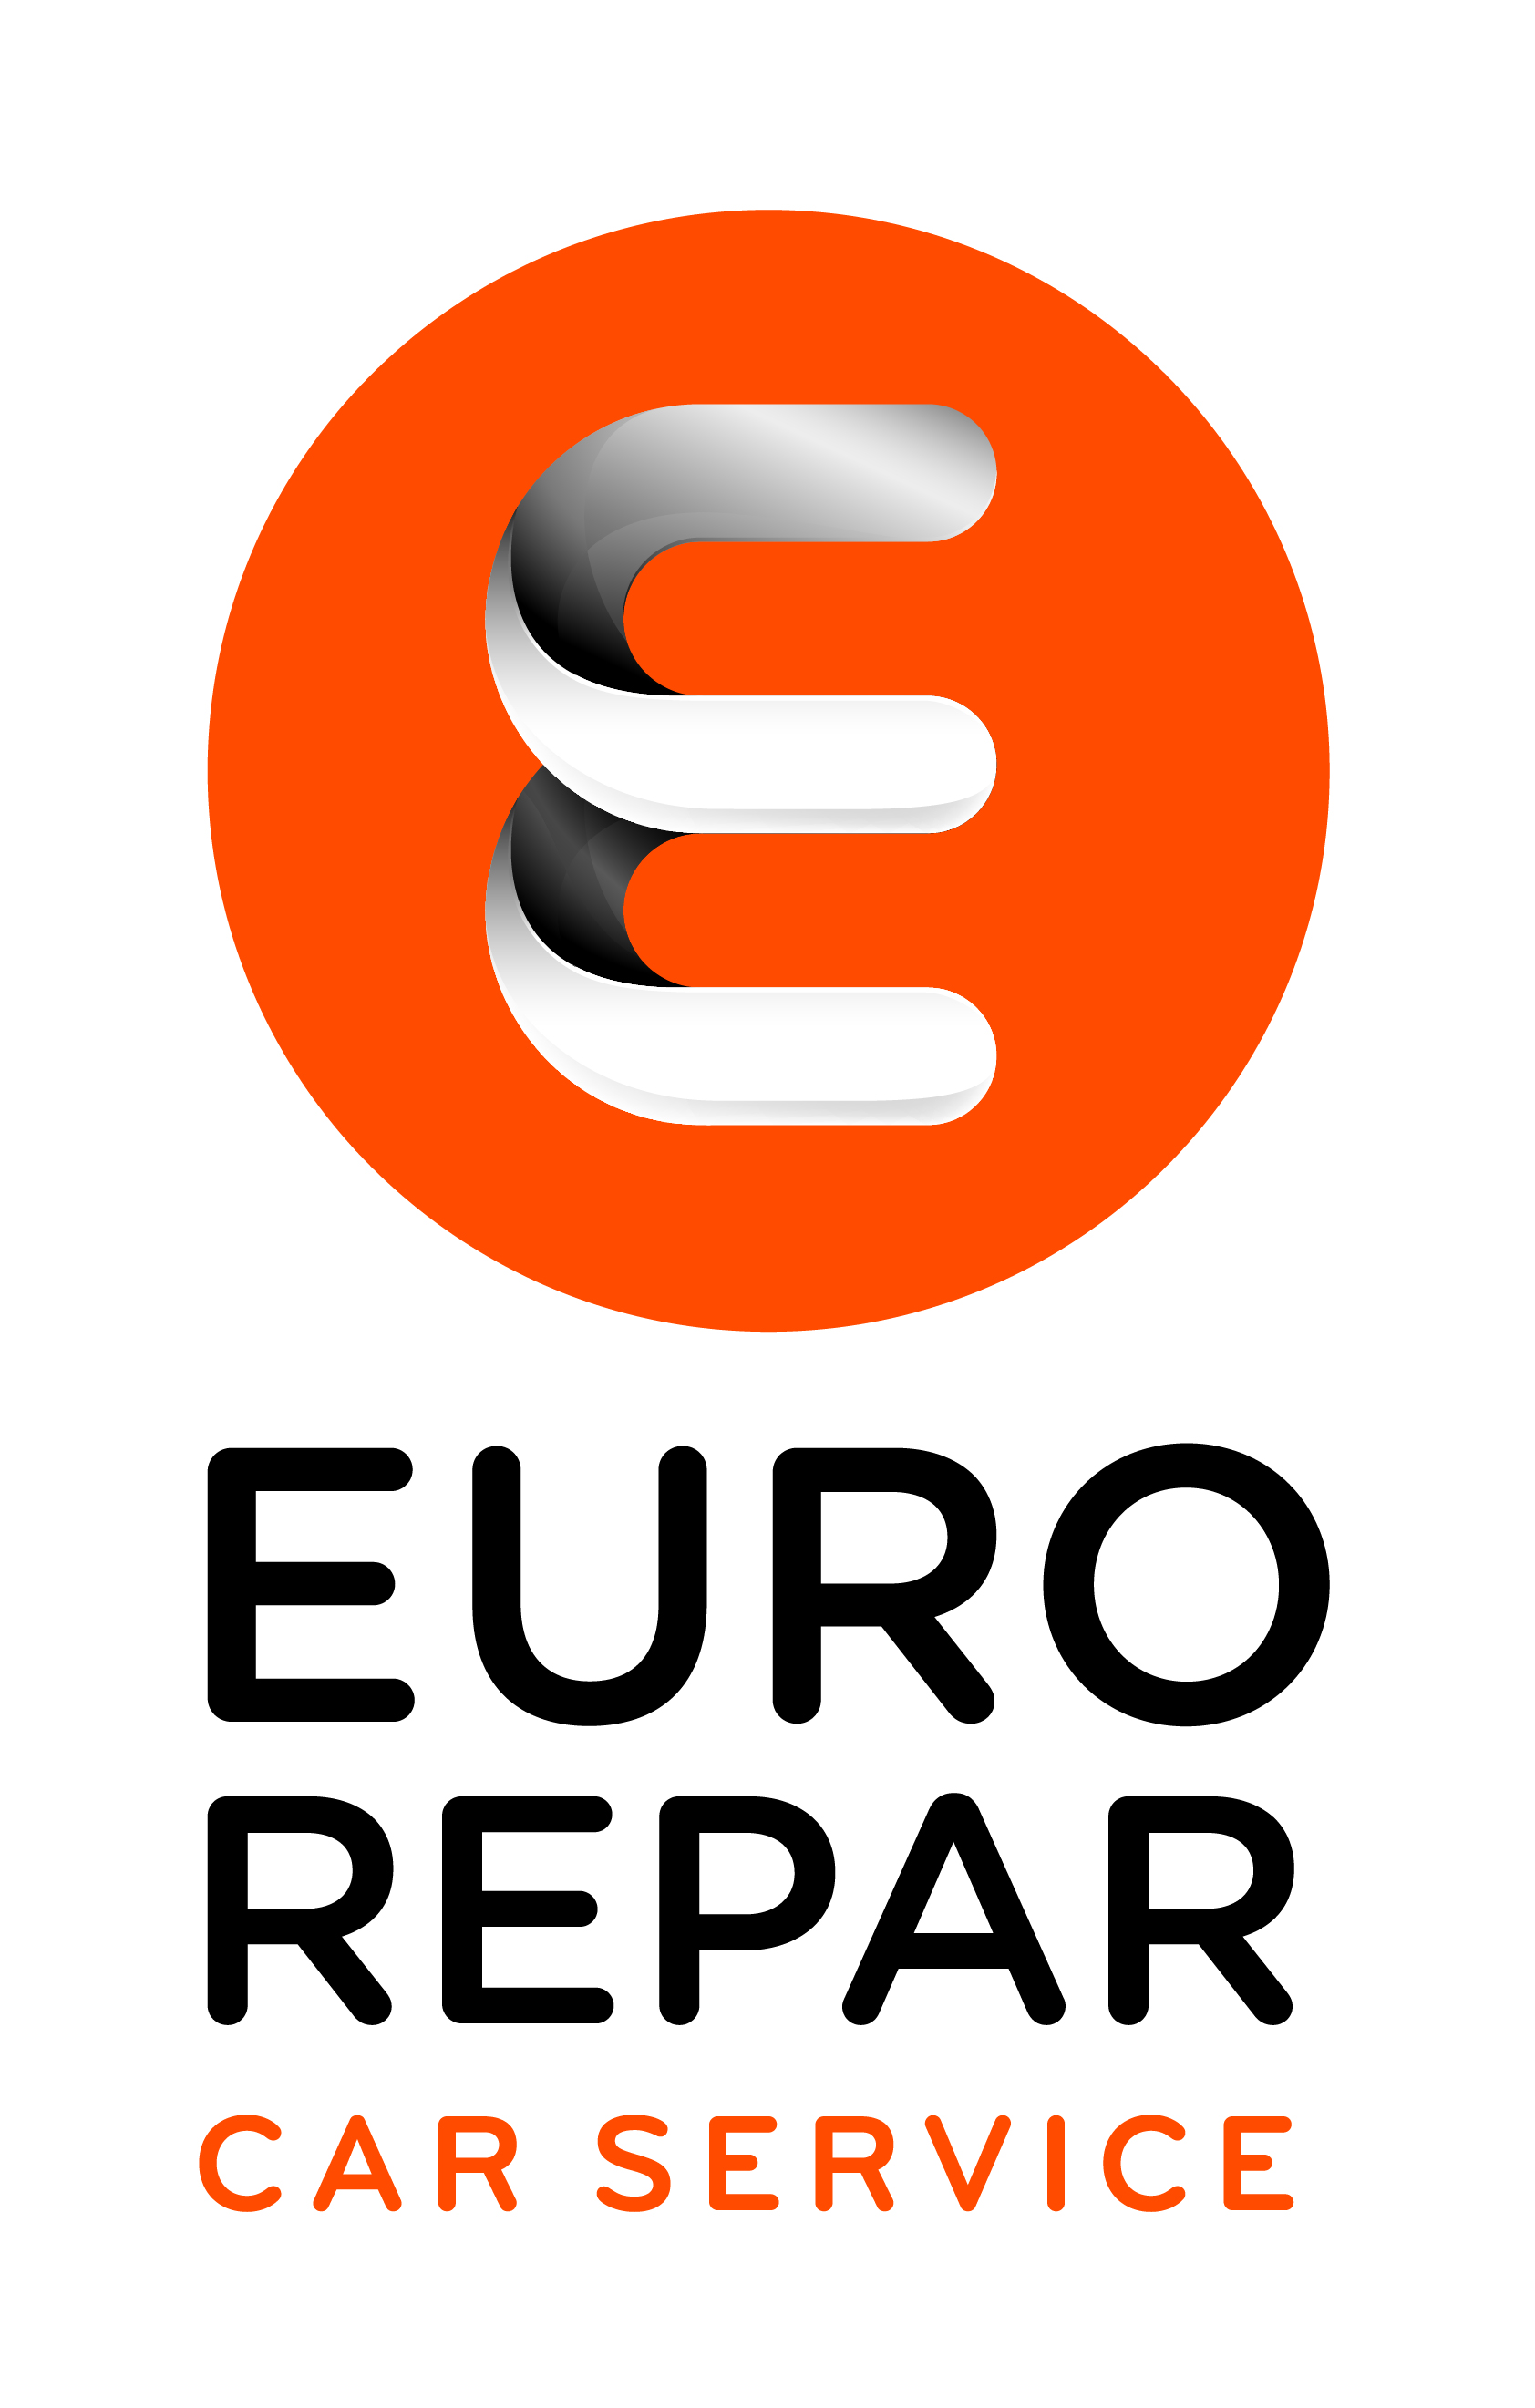 Euro Repar - Jc Services logo